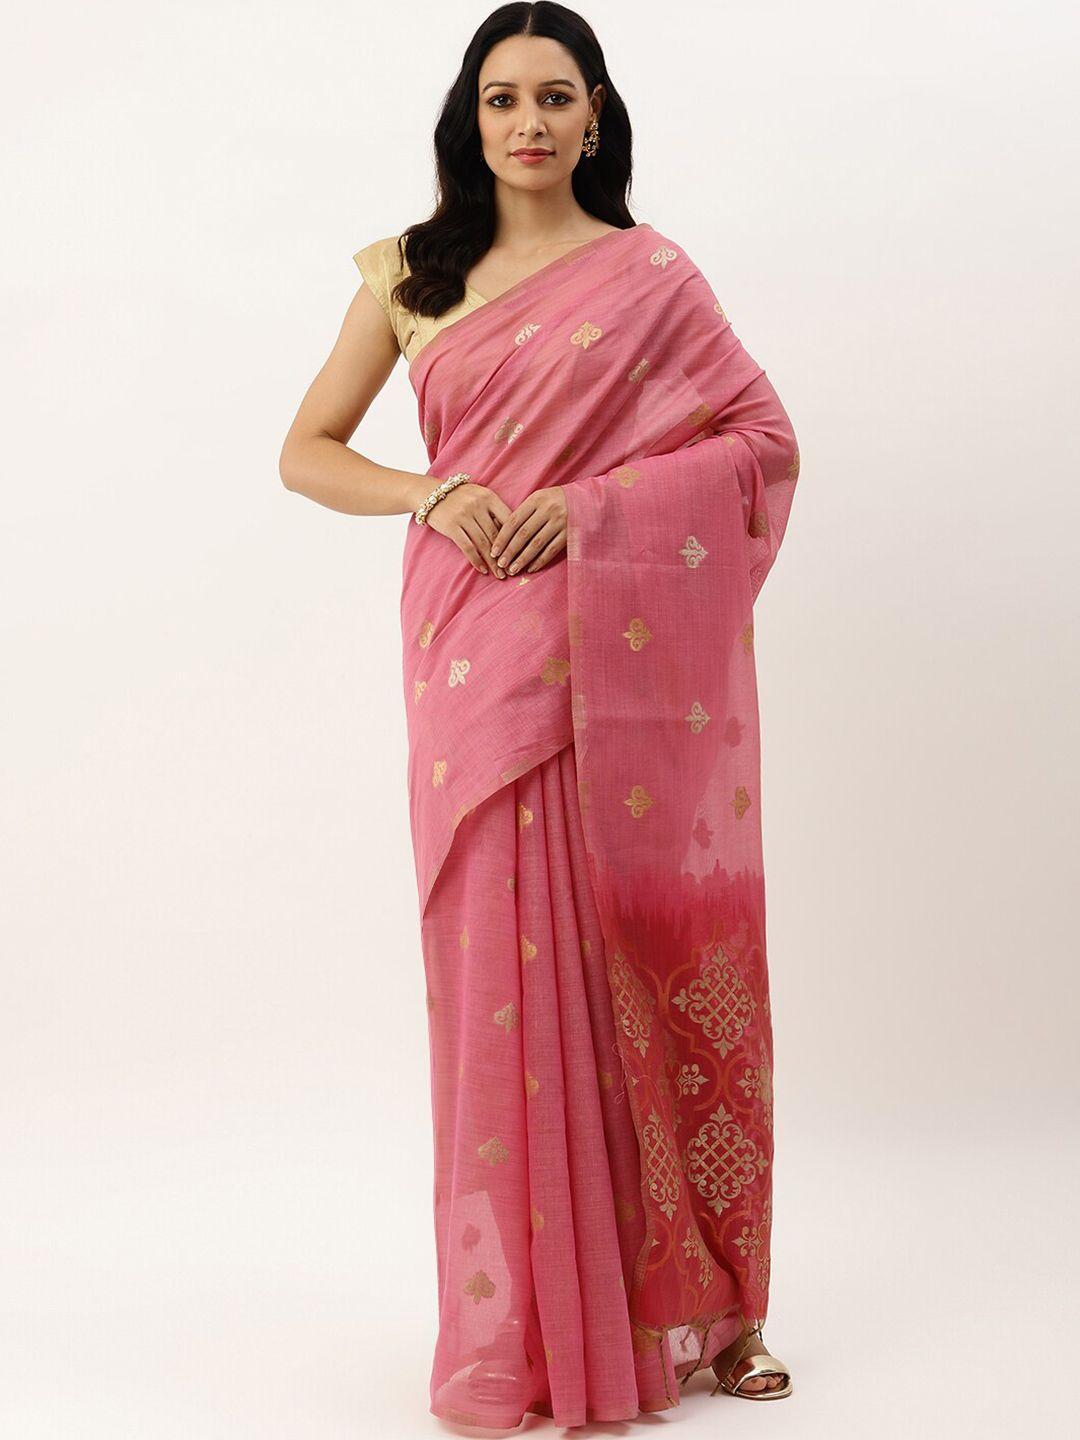 vishnu-weaves-women-pink-&-gold-toned-ethnic-motifs-pure-linen-banarasi-saree